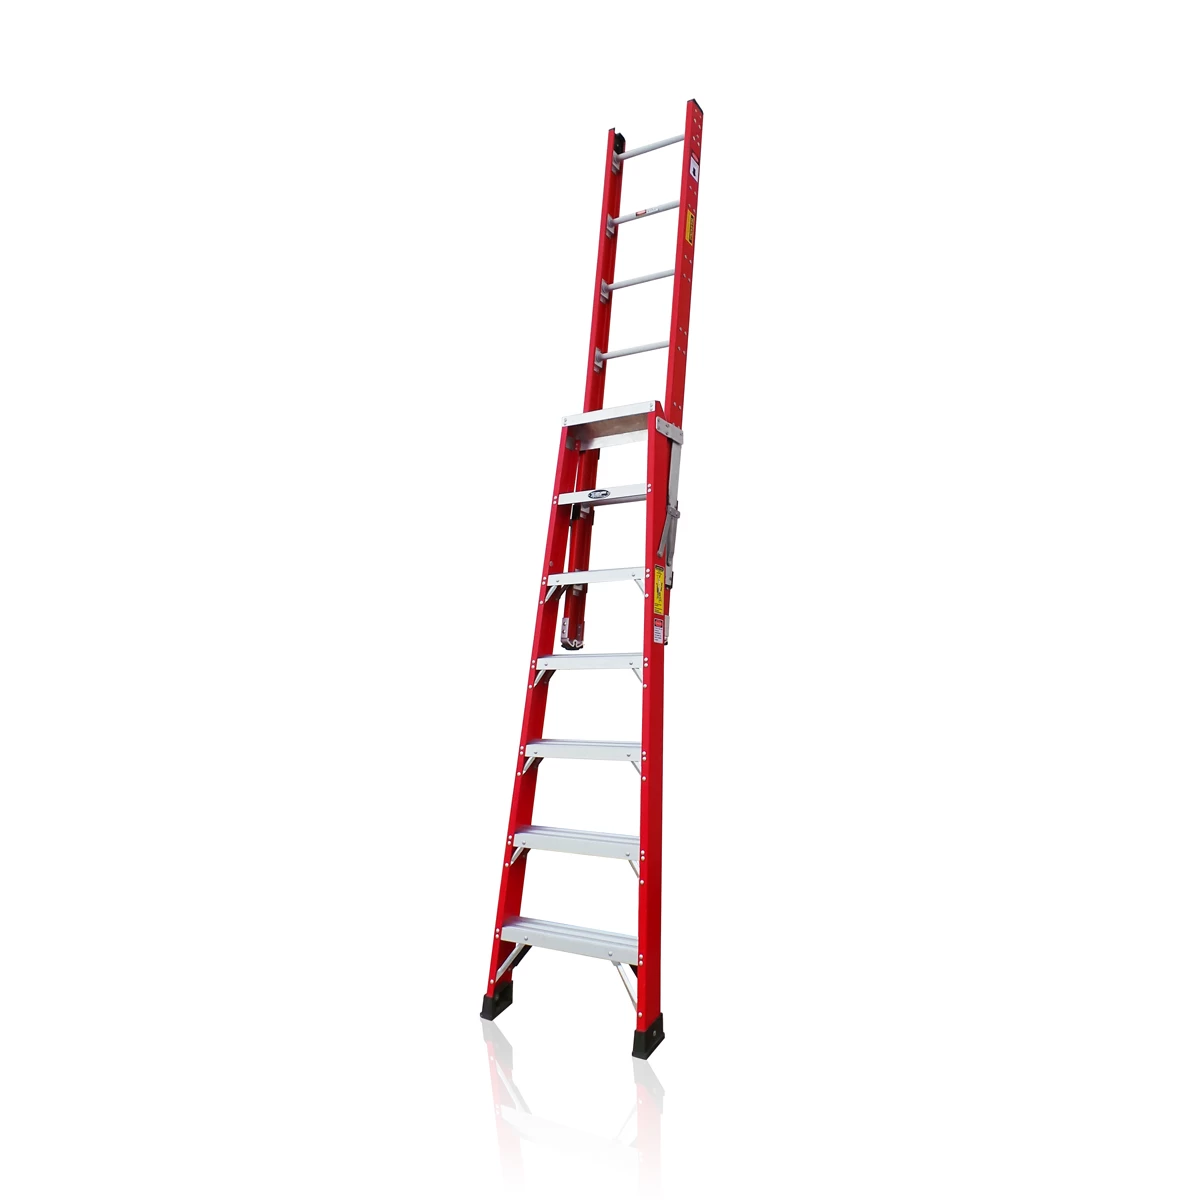 Xingon professional fiberglass platform step ladder with safety gate ANSI 207L